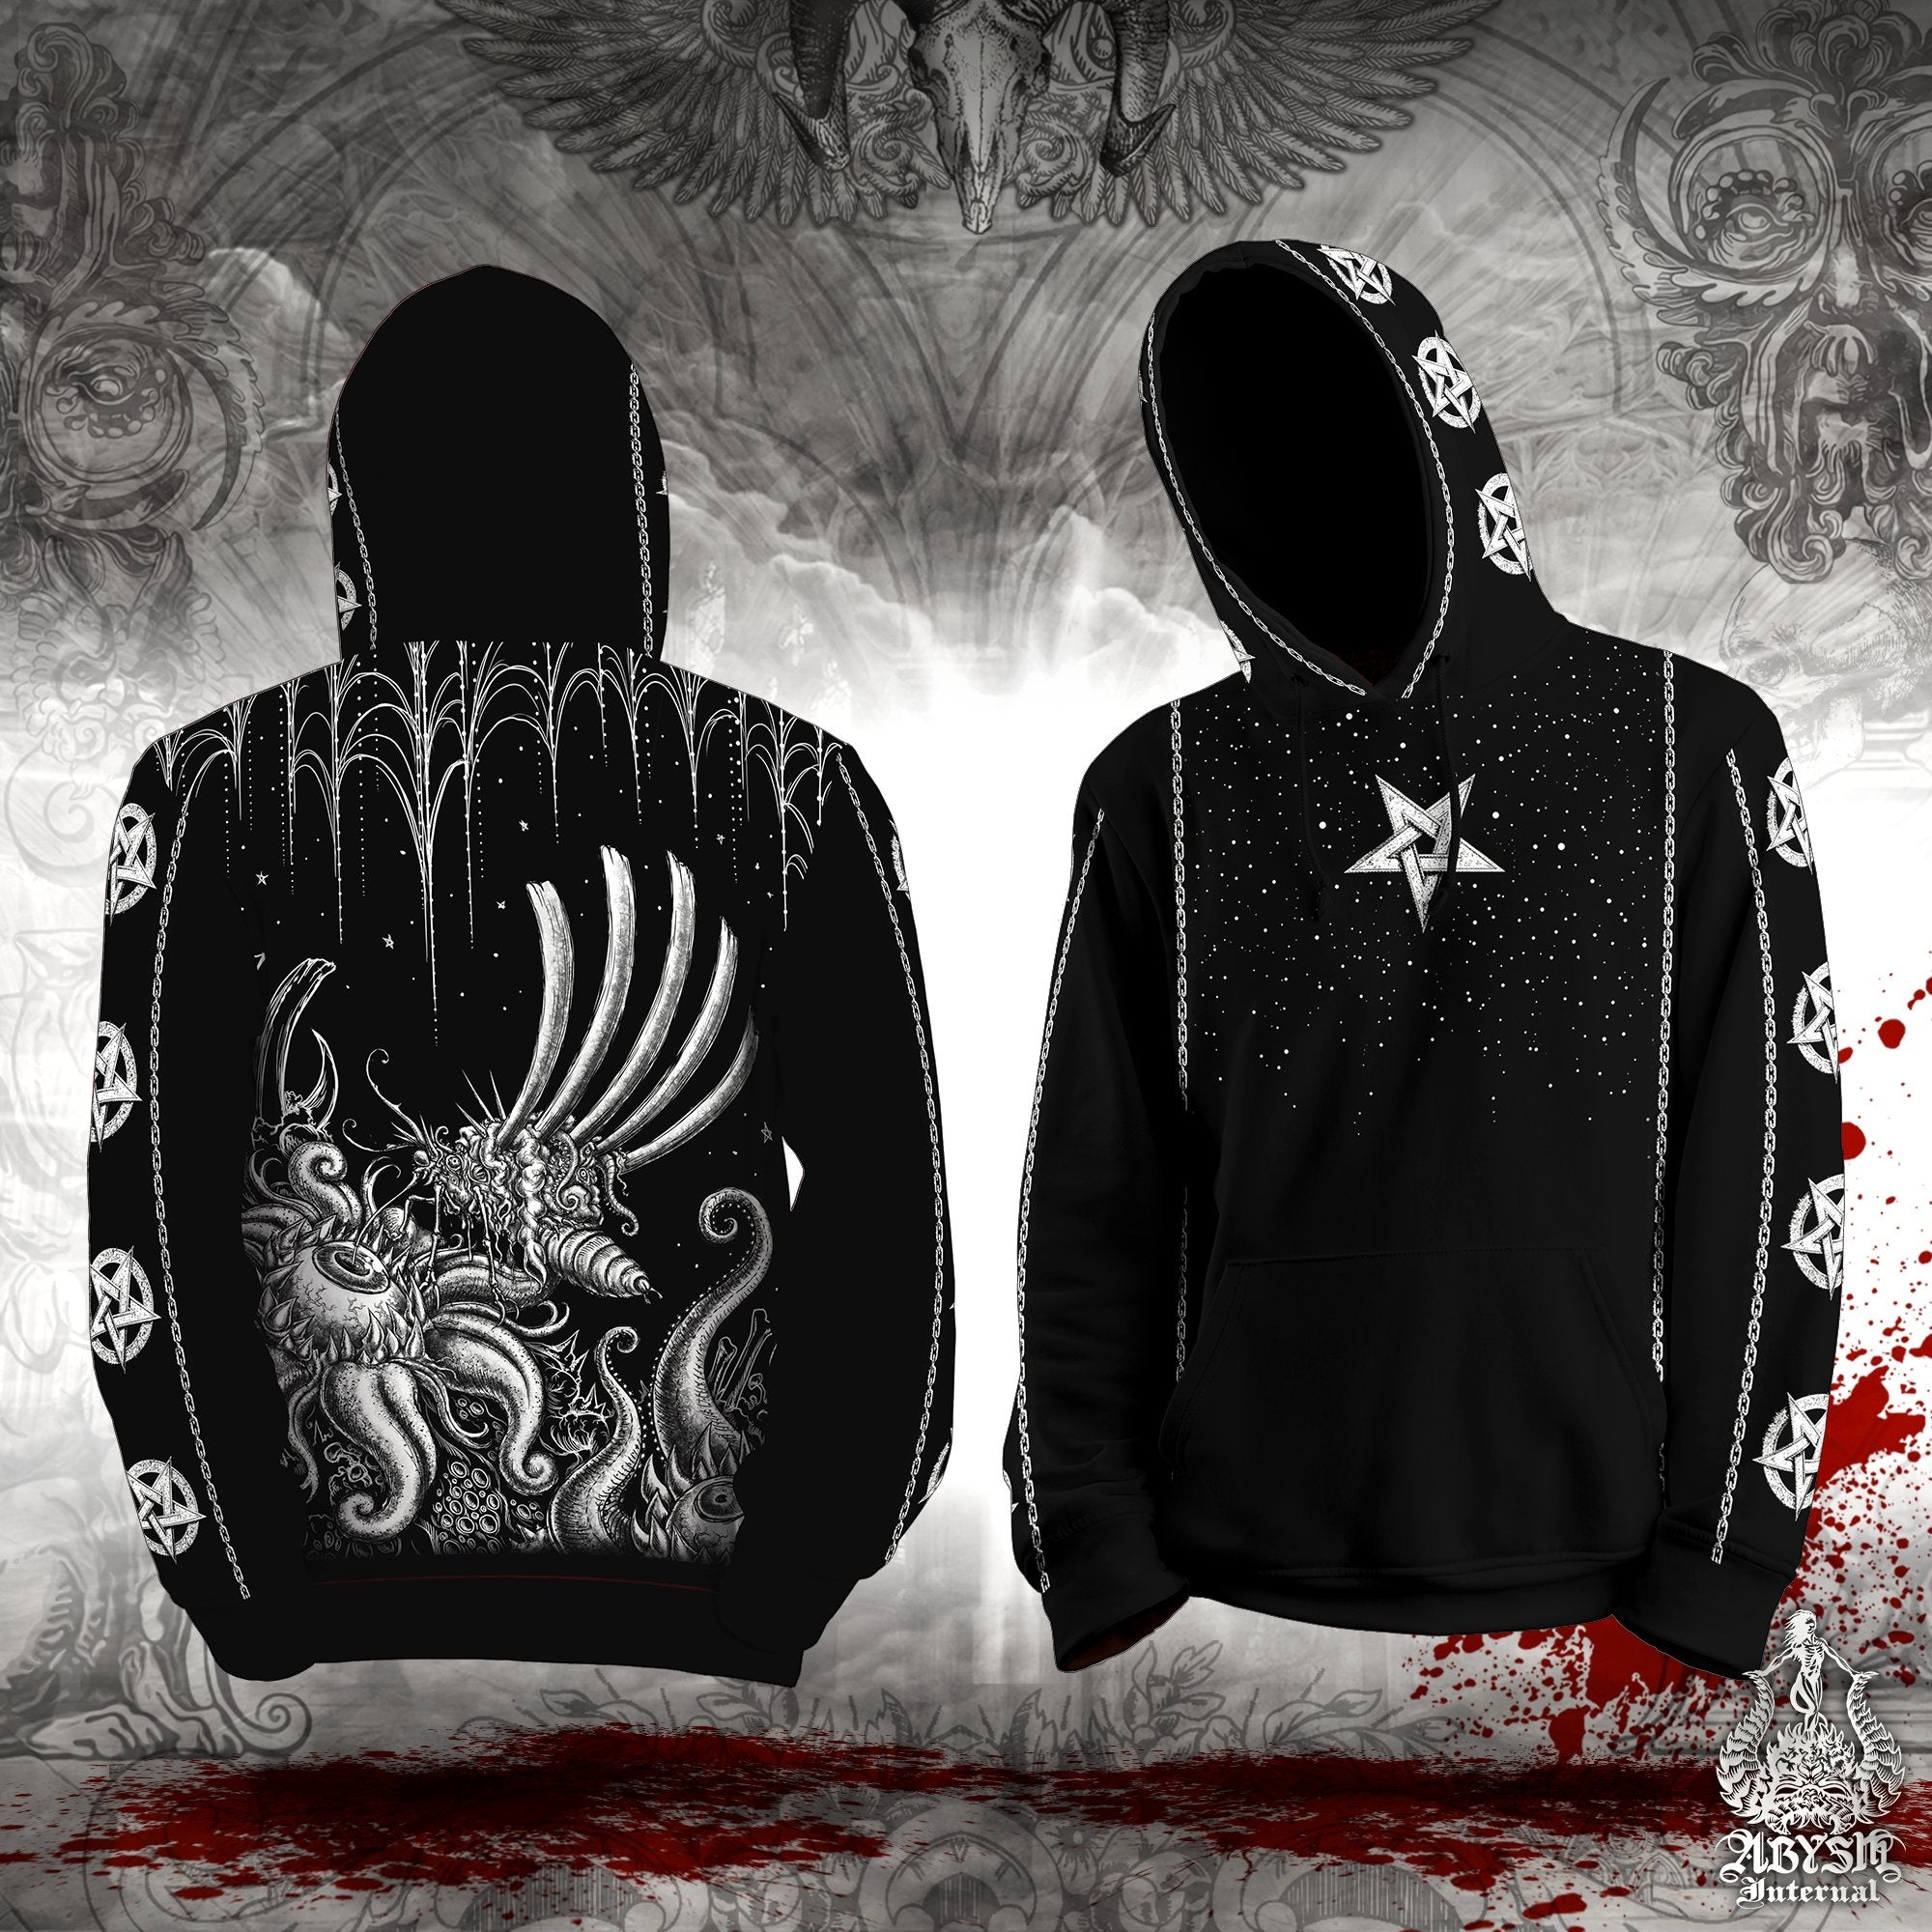 Horror Hoodie, Goth Streetwear, Black Metal, Alternative Clothing, Unisex - Gothic Hell, Bloodfly - Abysm Internal